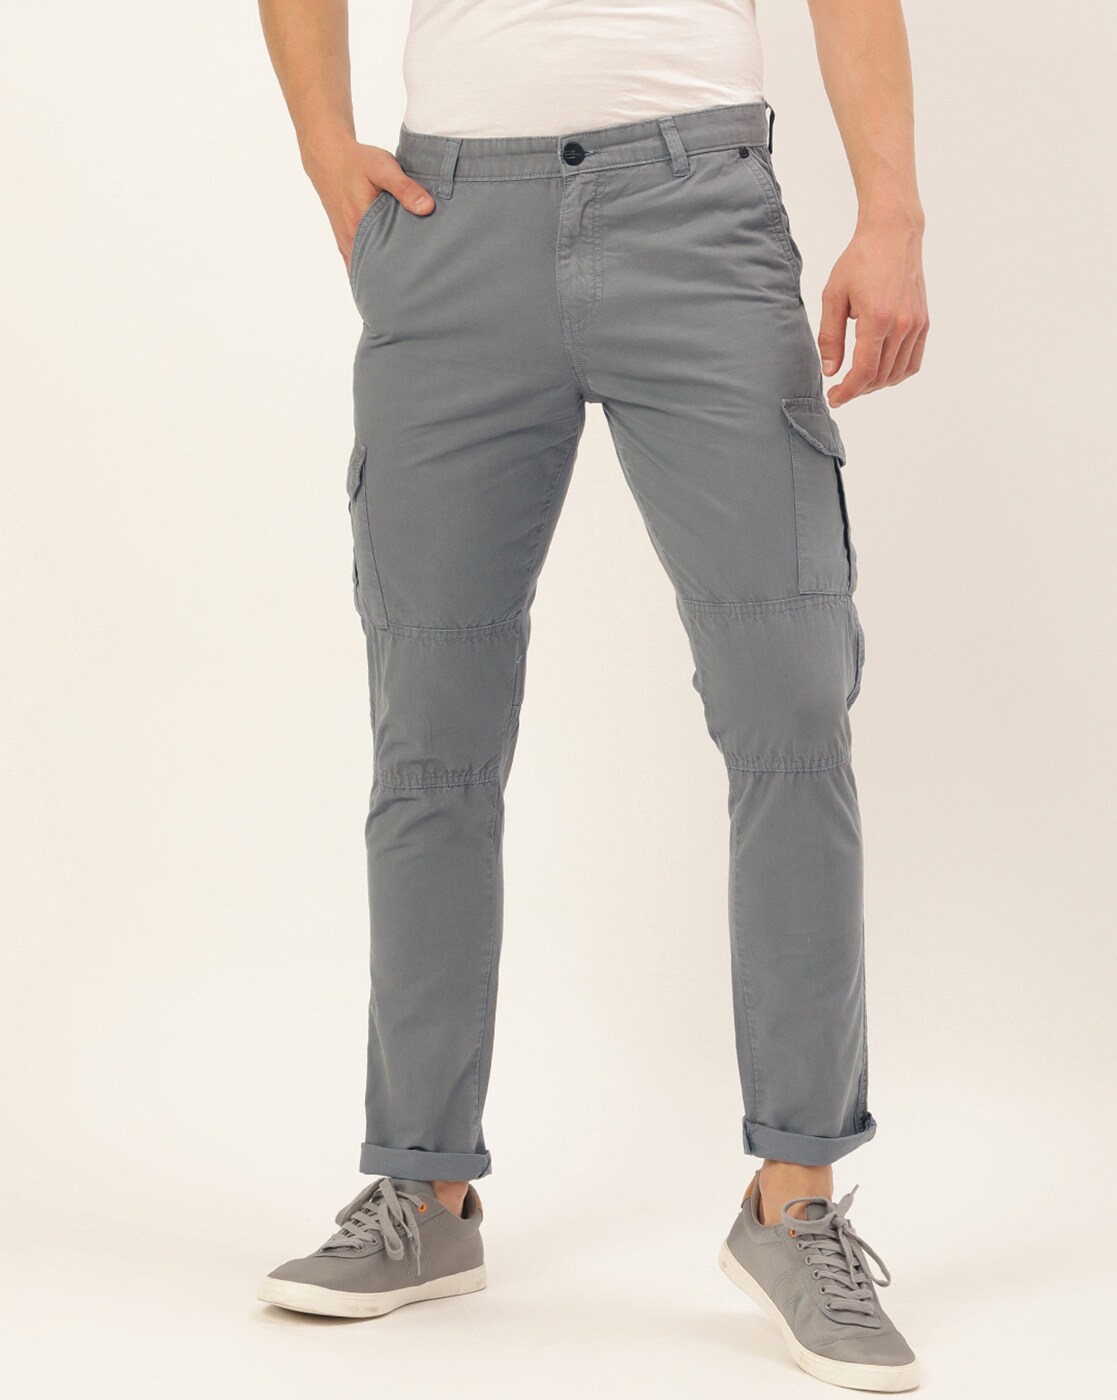 Buy Grey Trousers  Pants for Men by GAS Online  Ajiocom